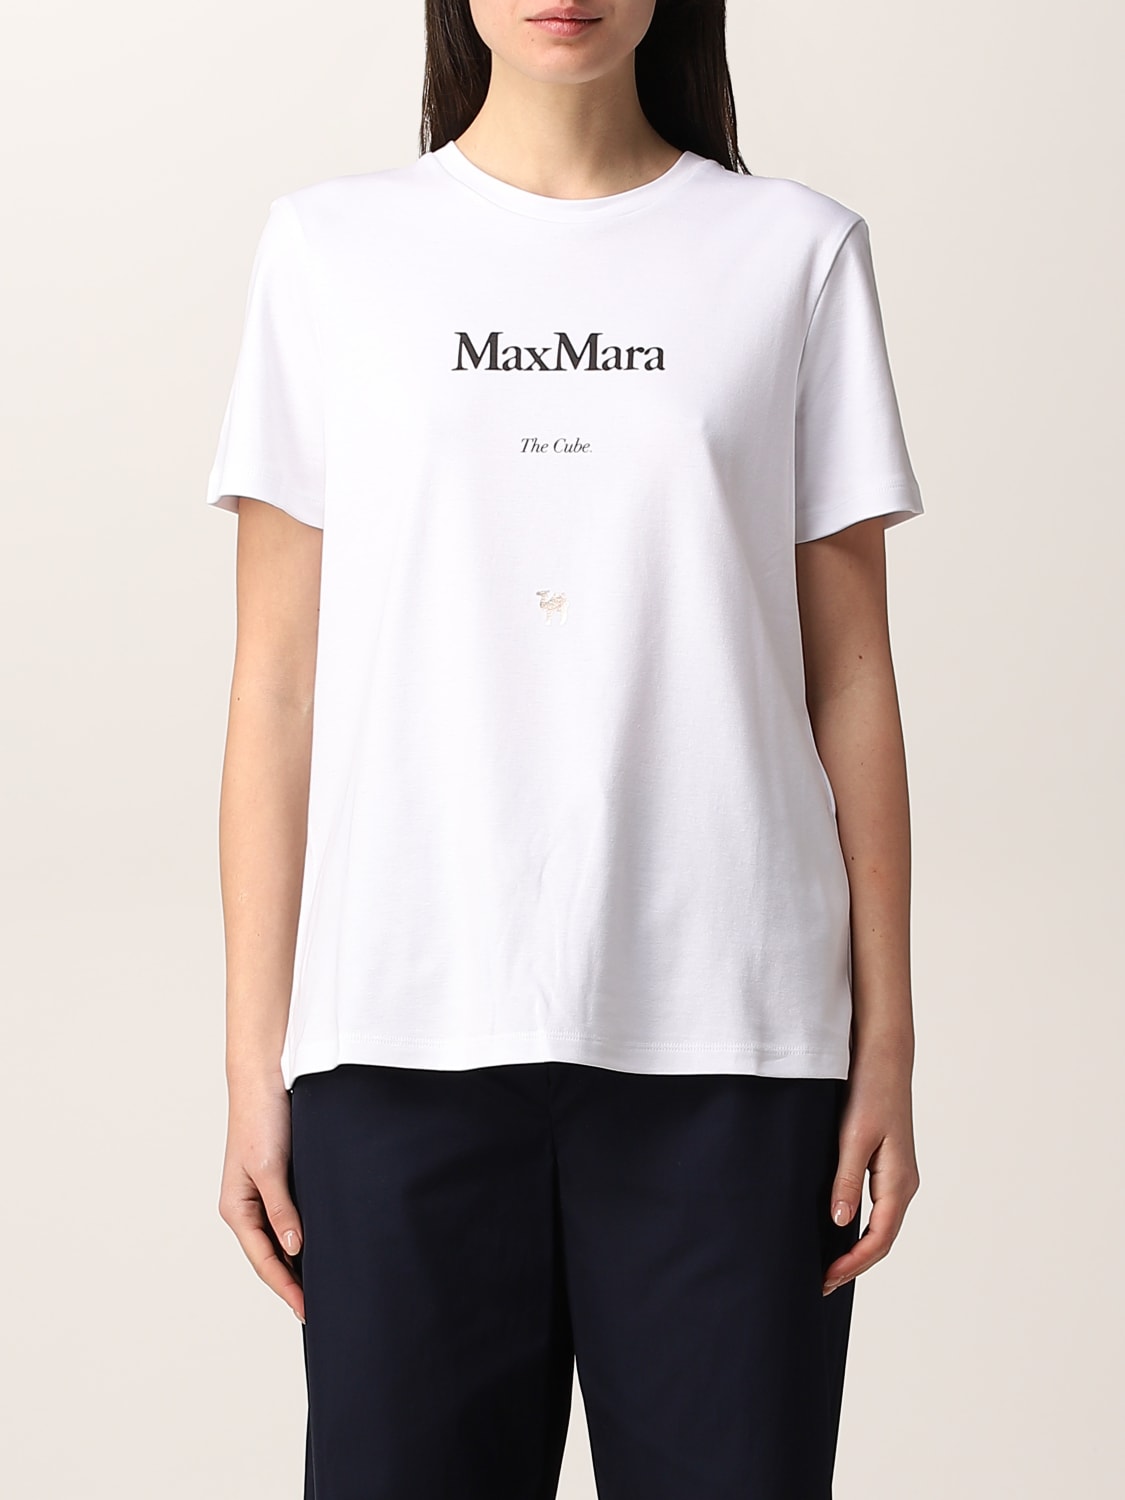 Tシャツ レディース S Max Mara